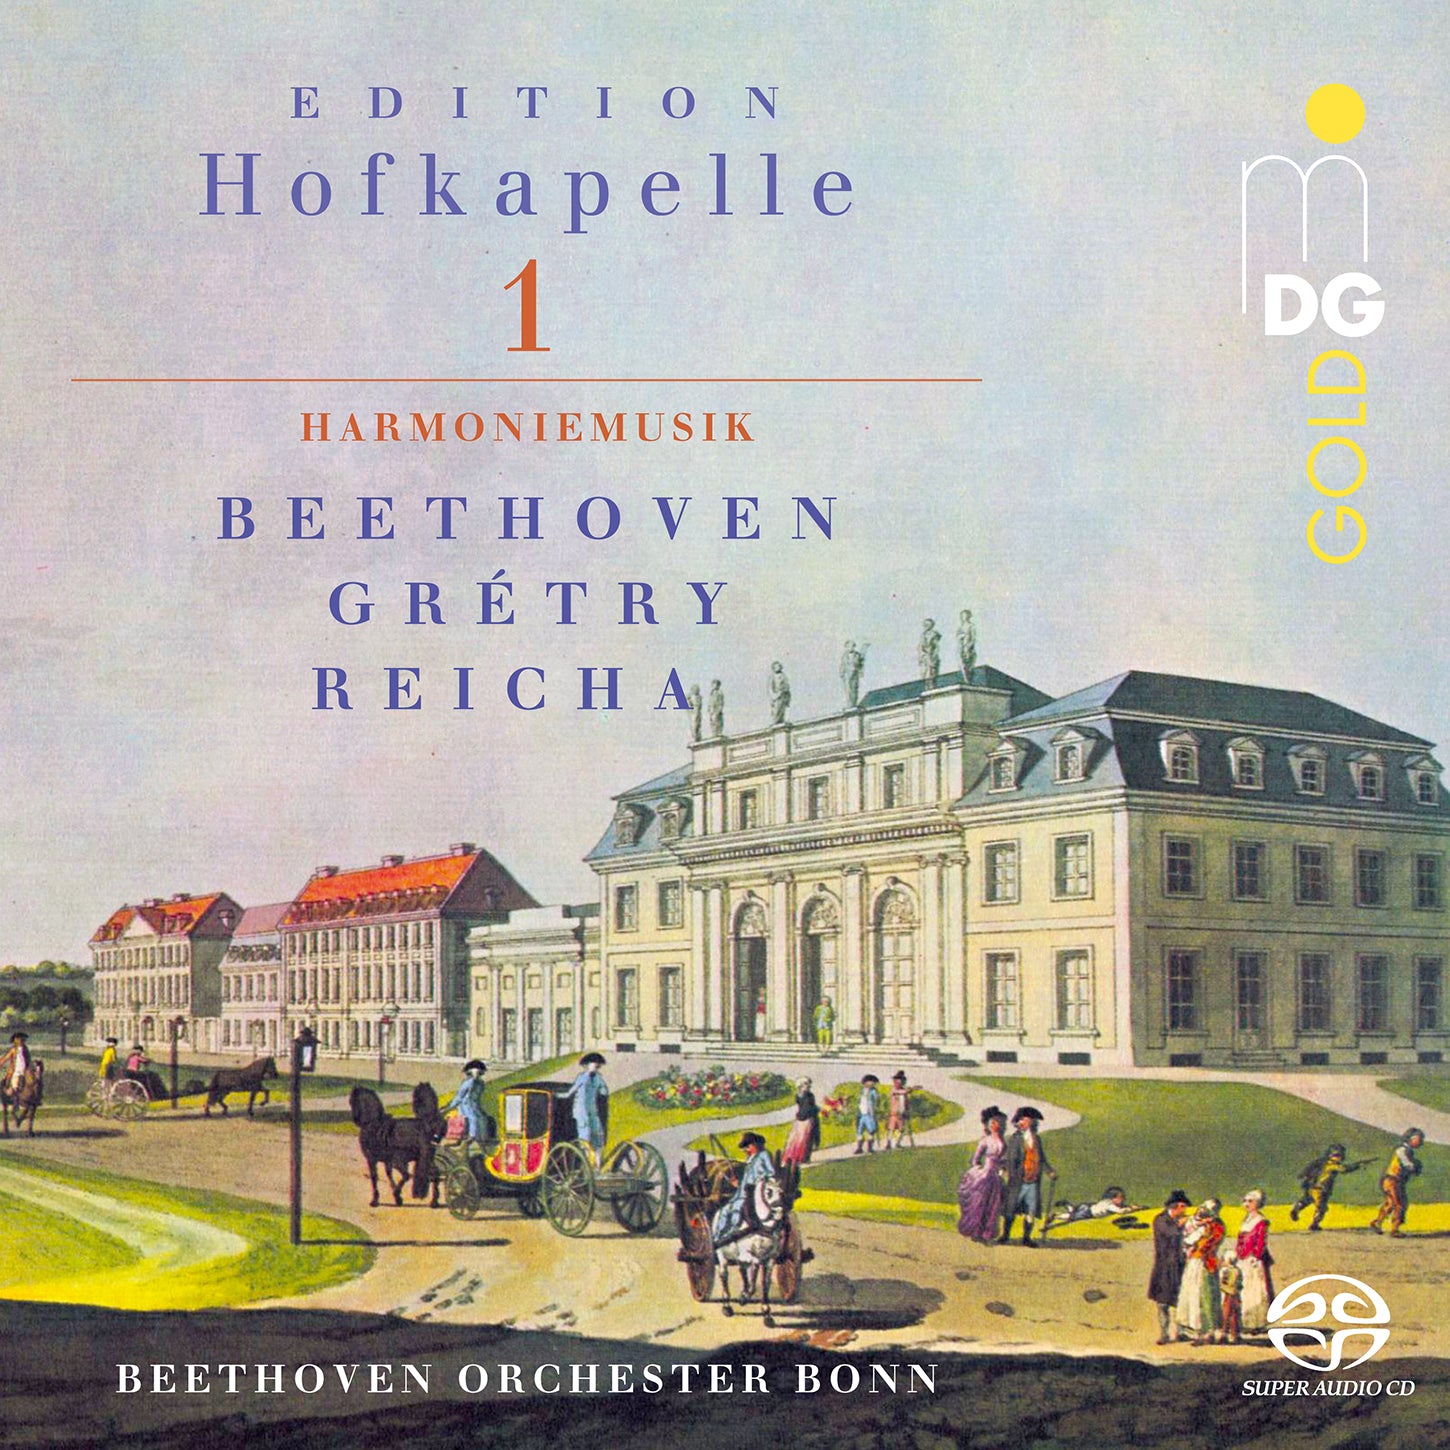 Beethoven, Grétry, Reicha: Edition Hofkapelle, Vol. 1 / Beethoven Orchestra Bonn